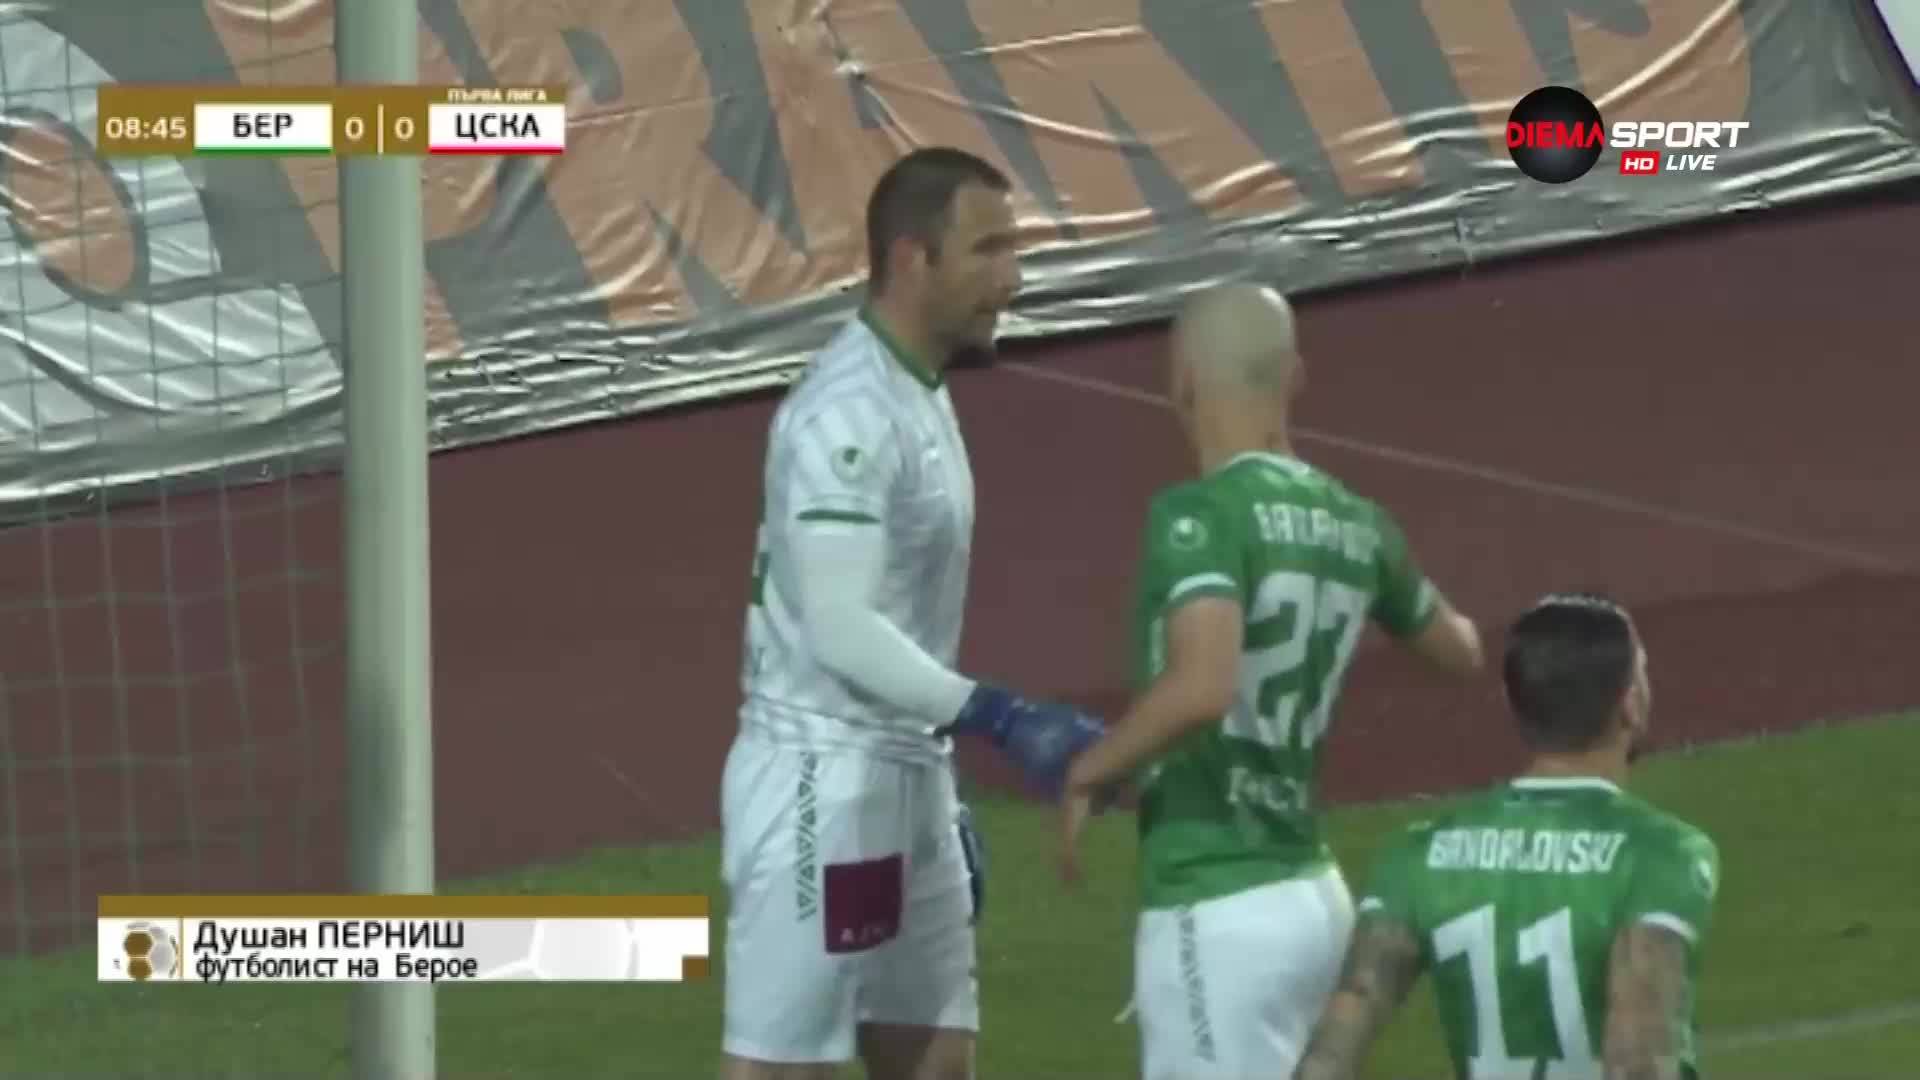 Спасяване на Душан Перниш срещу ЦСКА